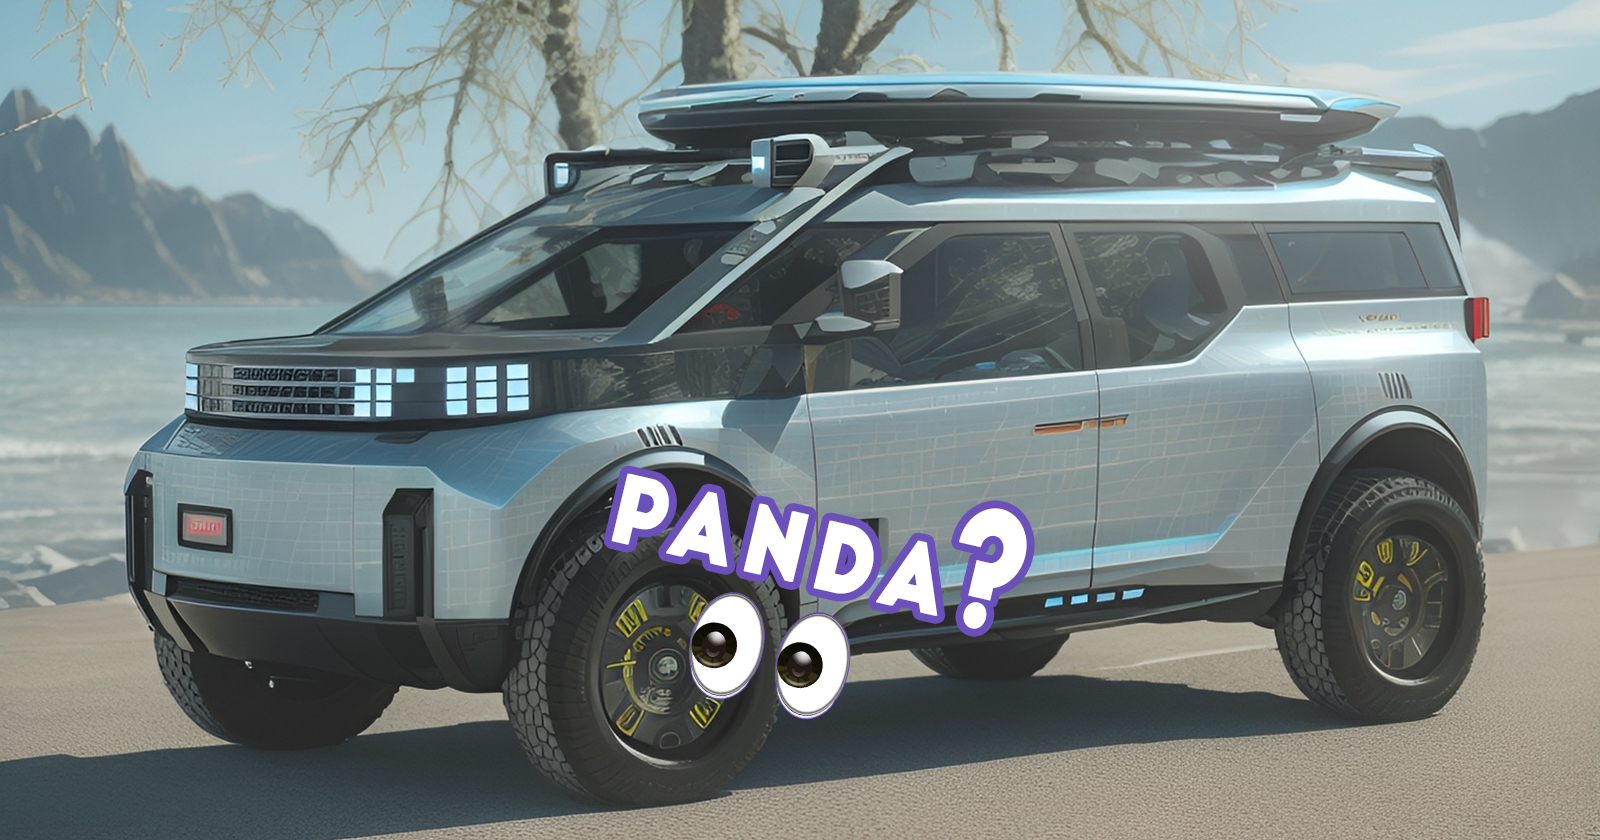 FIAT Impresses with Panda Concept Models